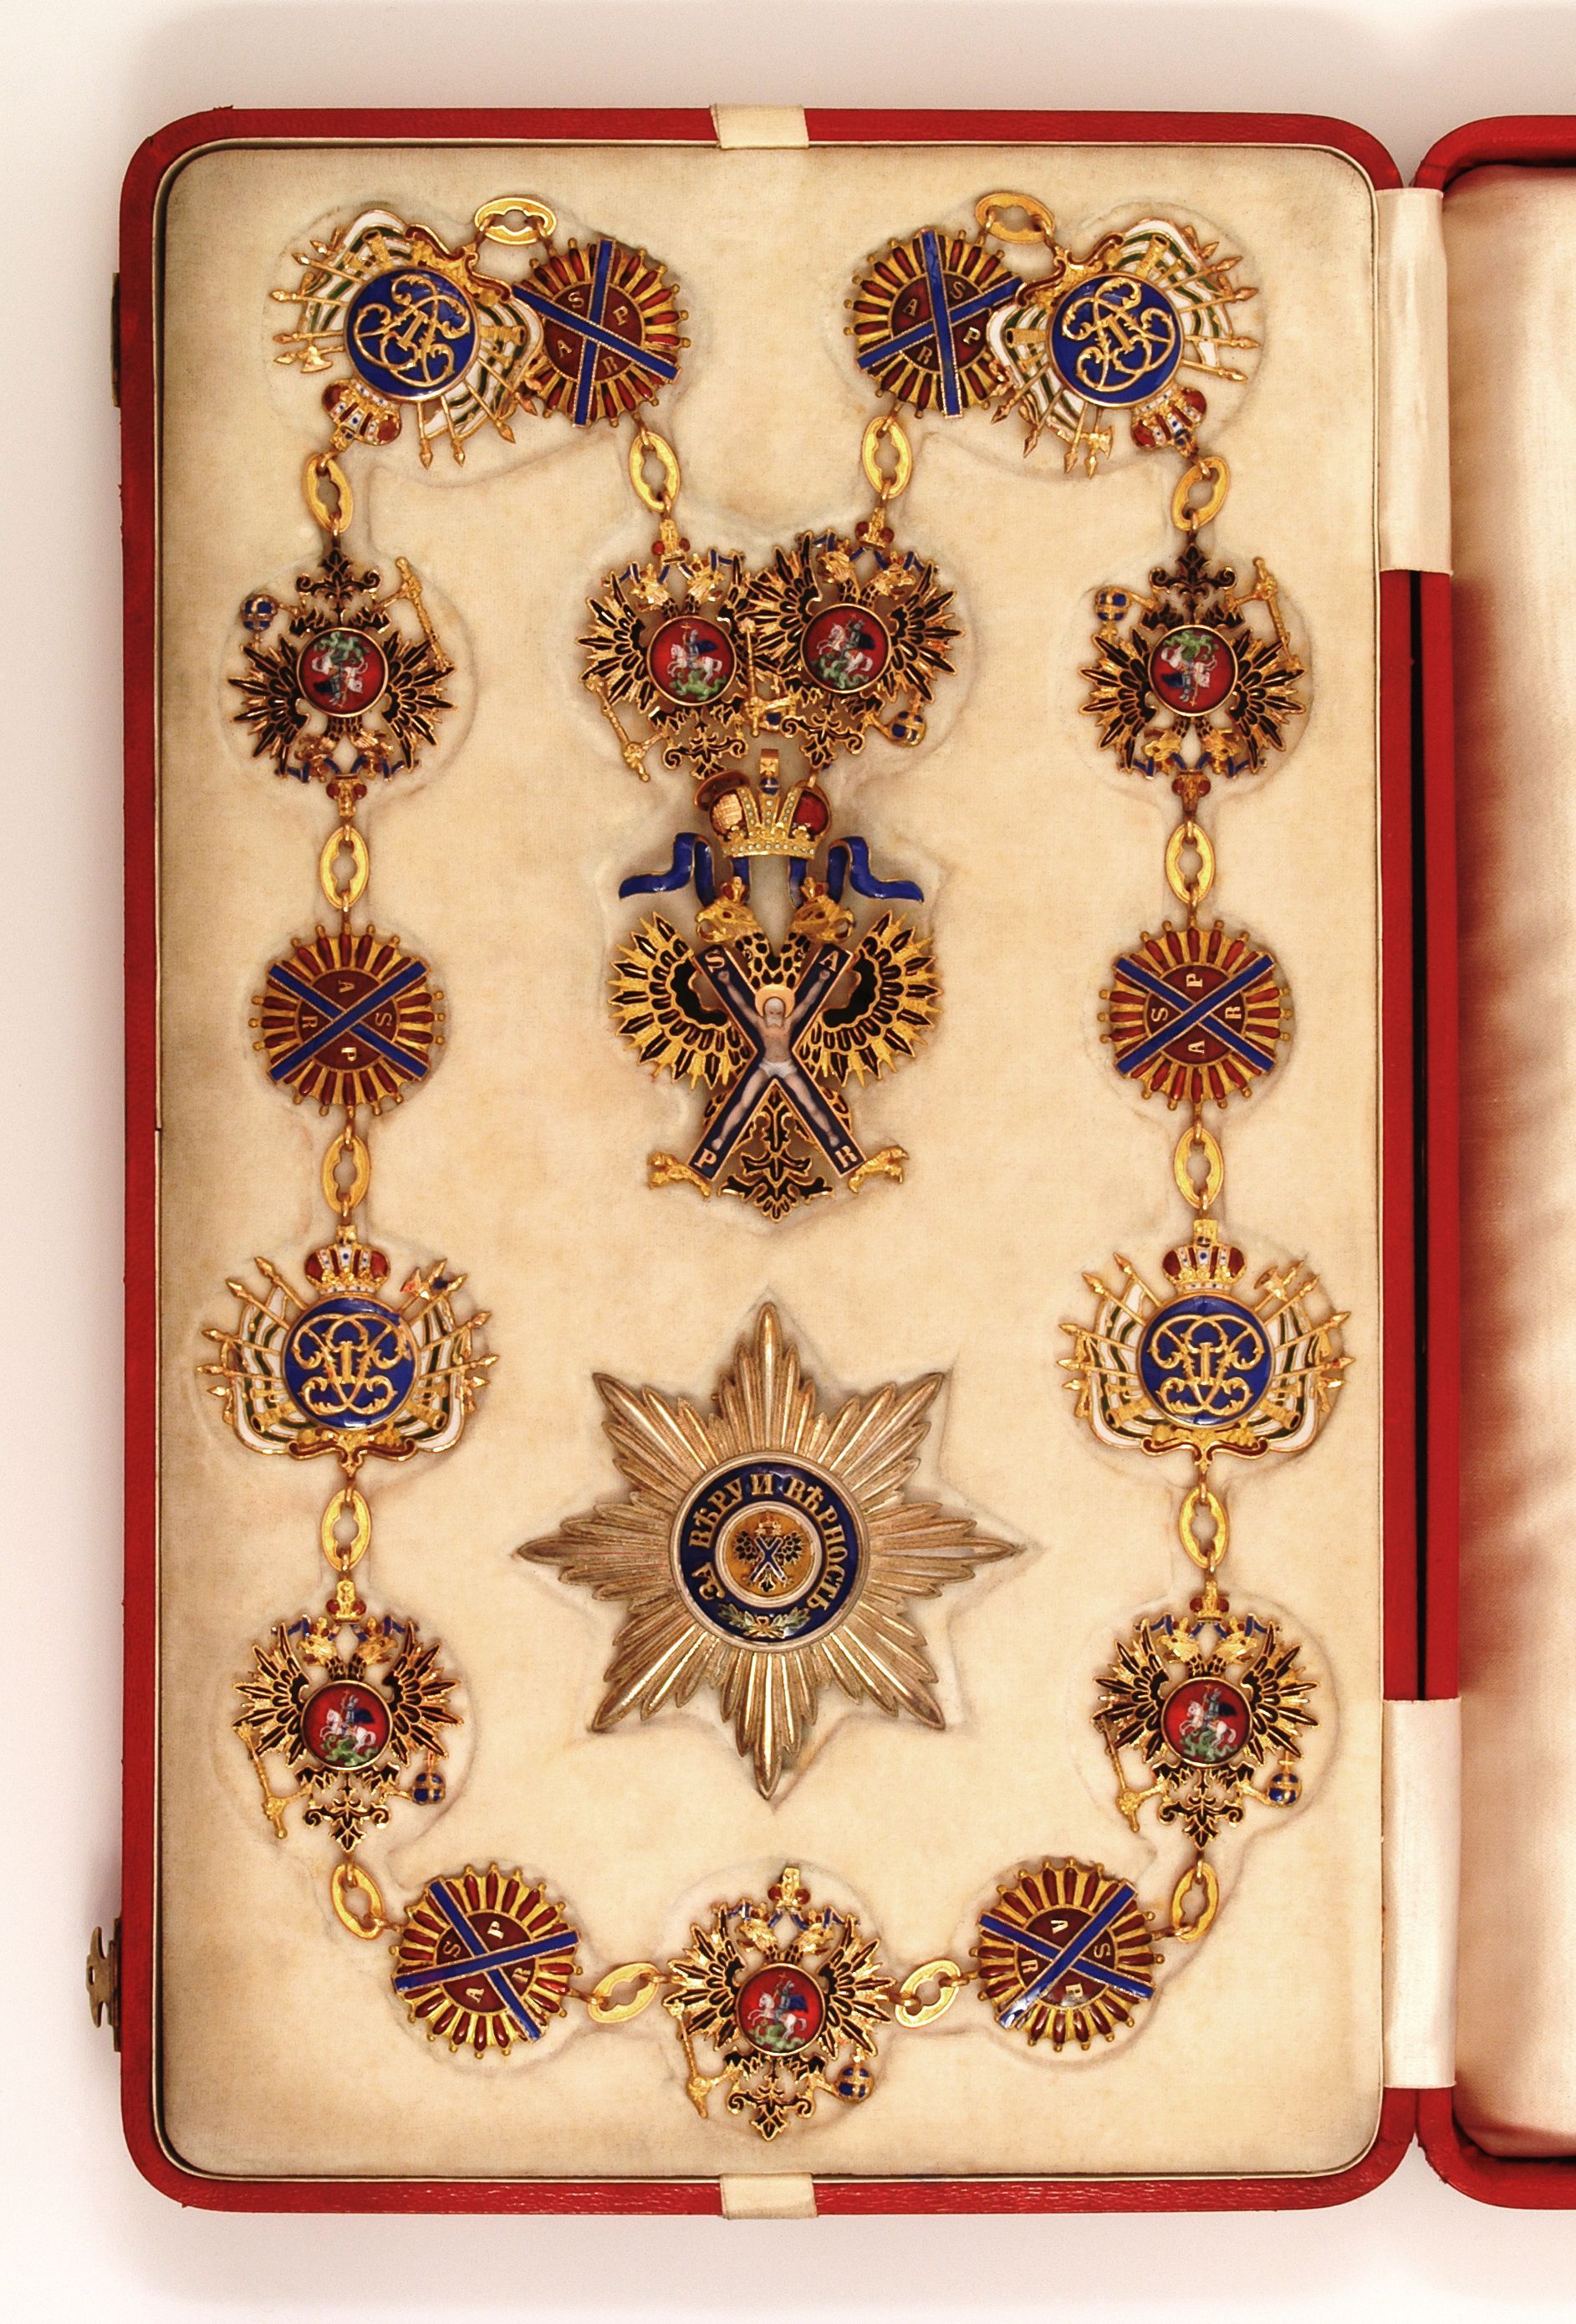 Order of Saint Andrew - Set of Insignia | World Orders | Pinterest ...